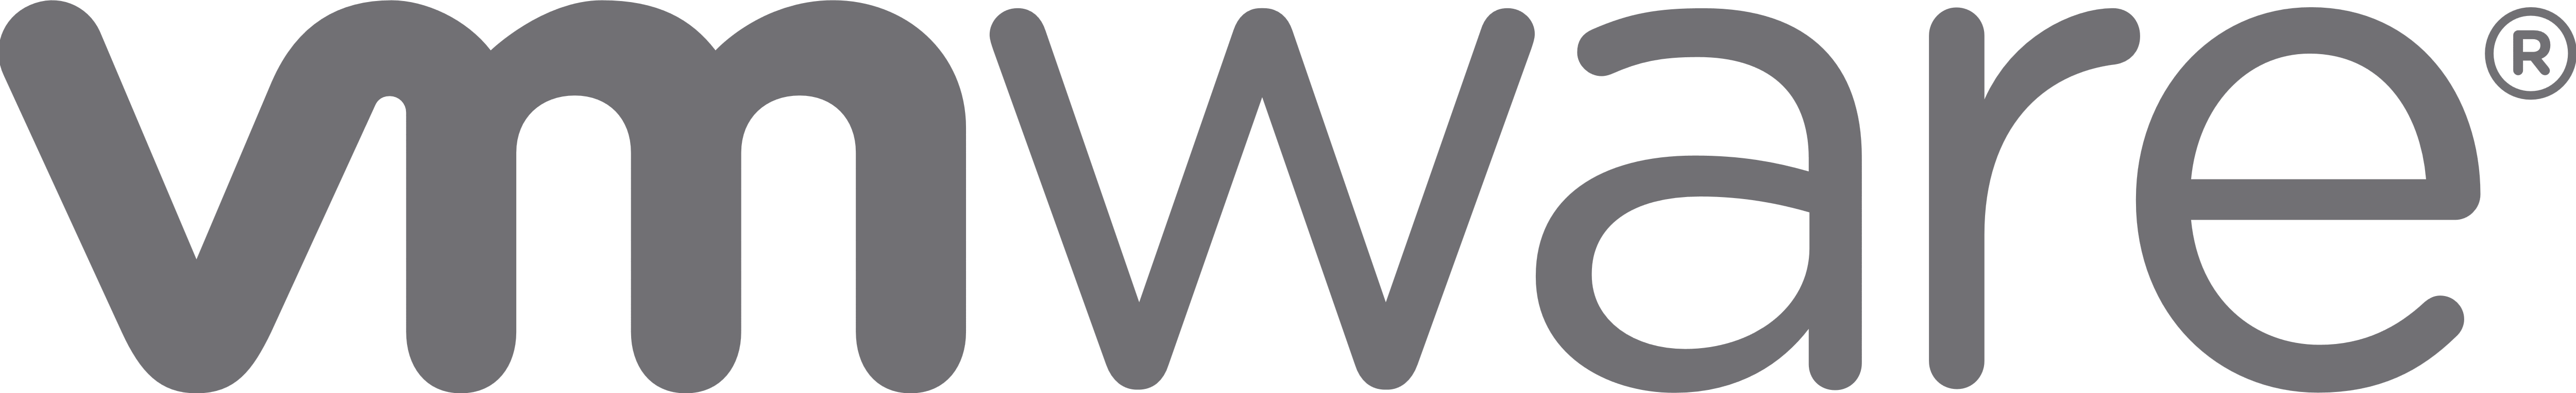 vmware-symbol-png-logo-3